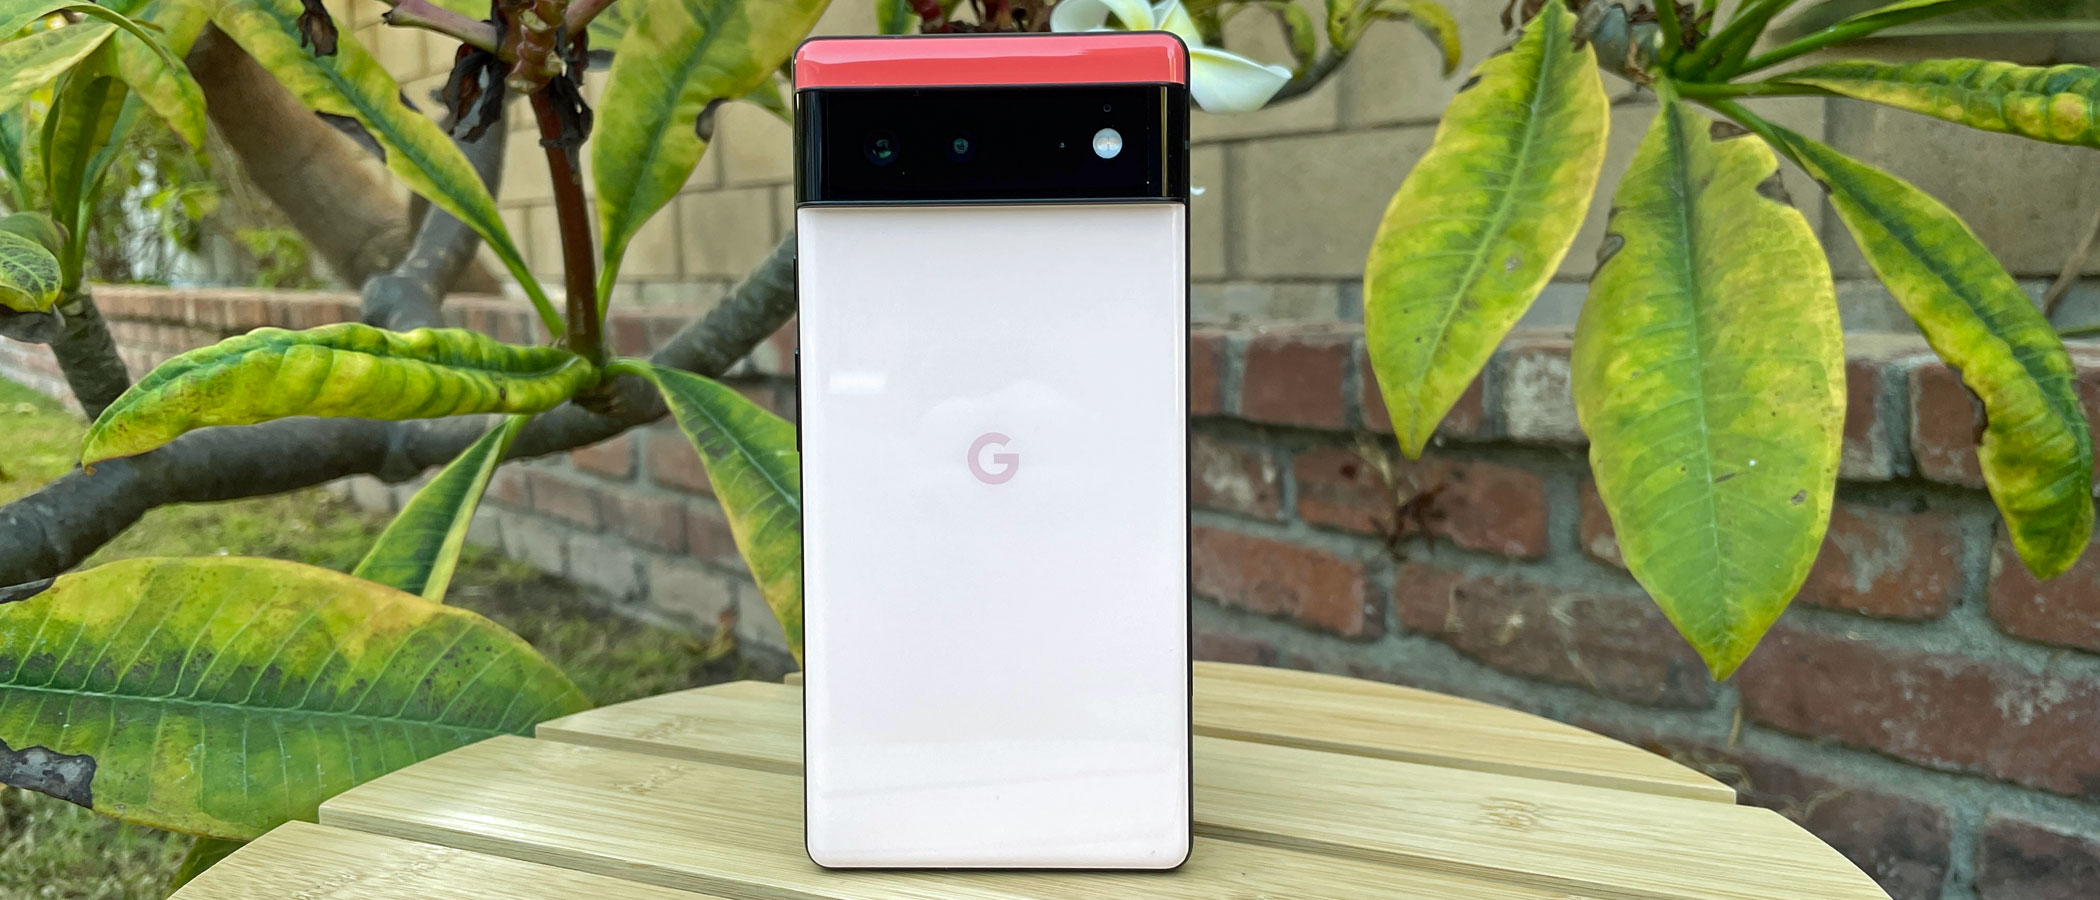 Google Pixel 6 review: redefining phone photo perfection | TechRadar